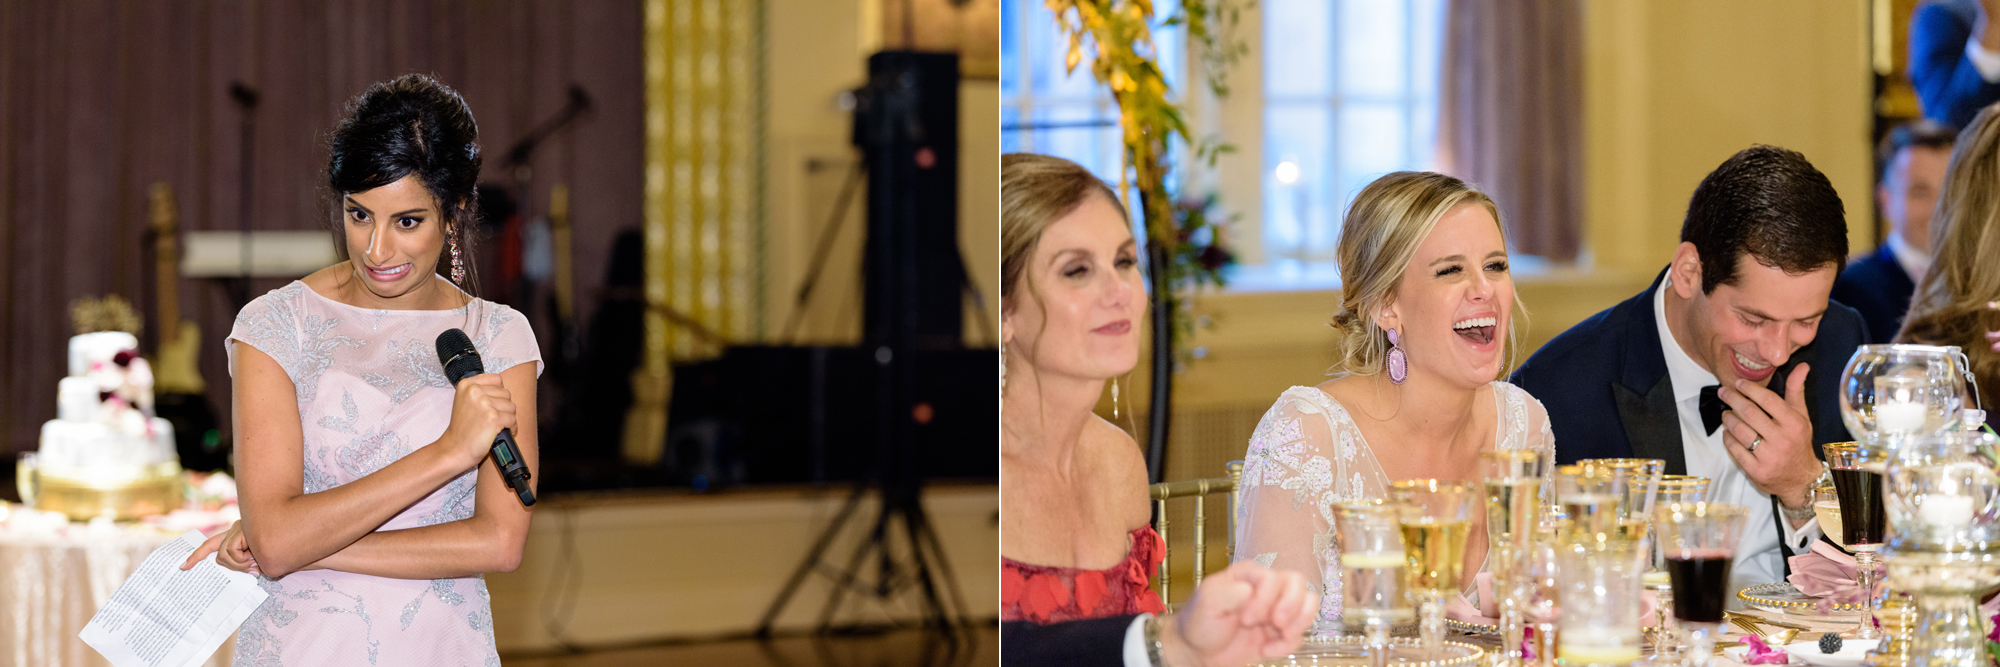 Maid of Honor’s Toast at a Wedding Reception at the Palais Royale